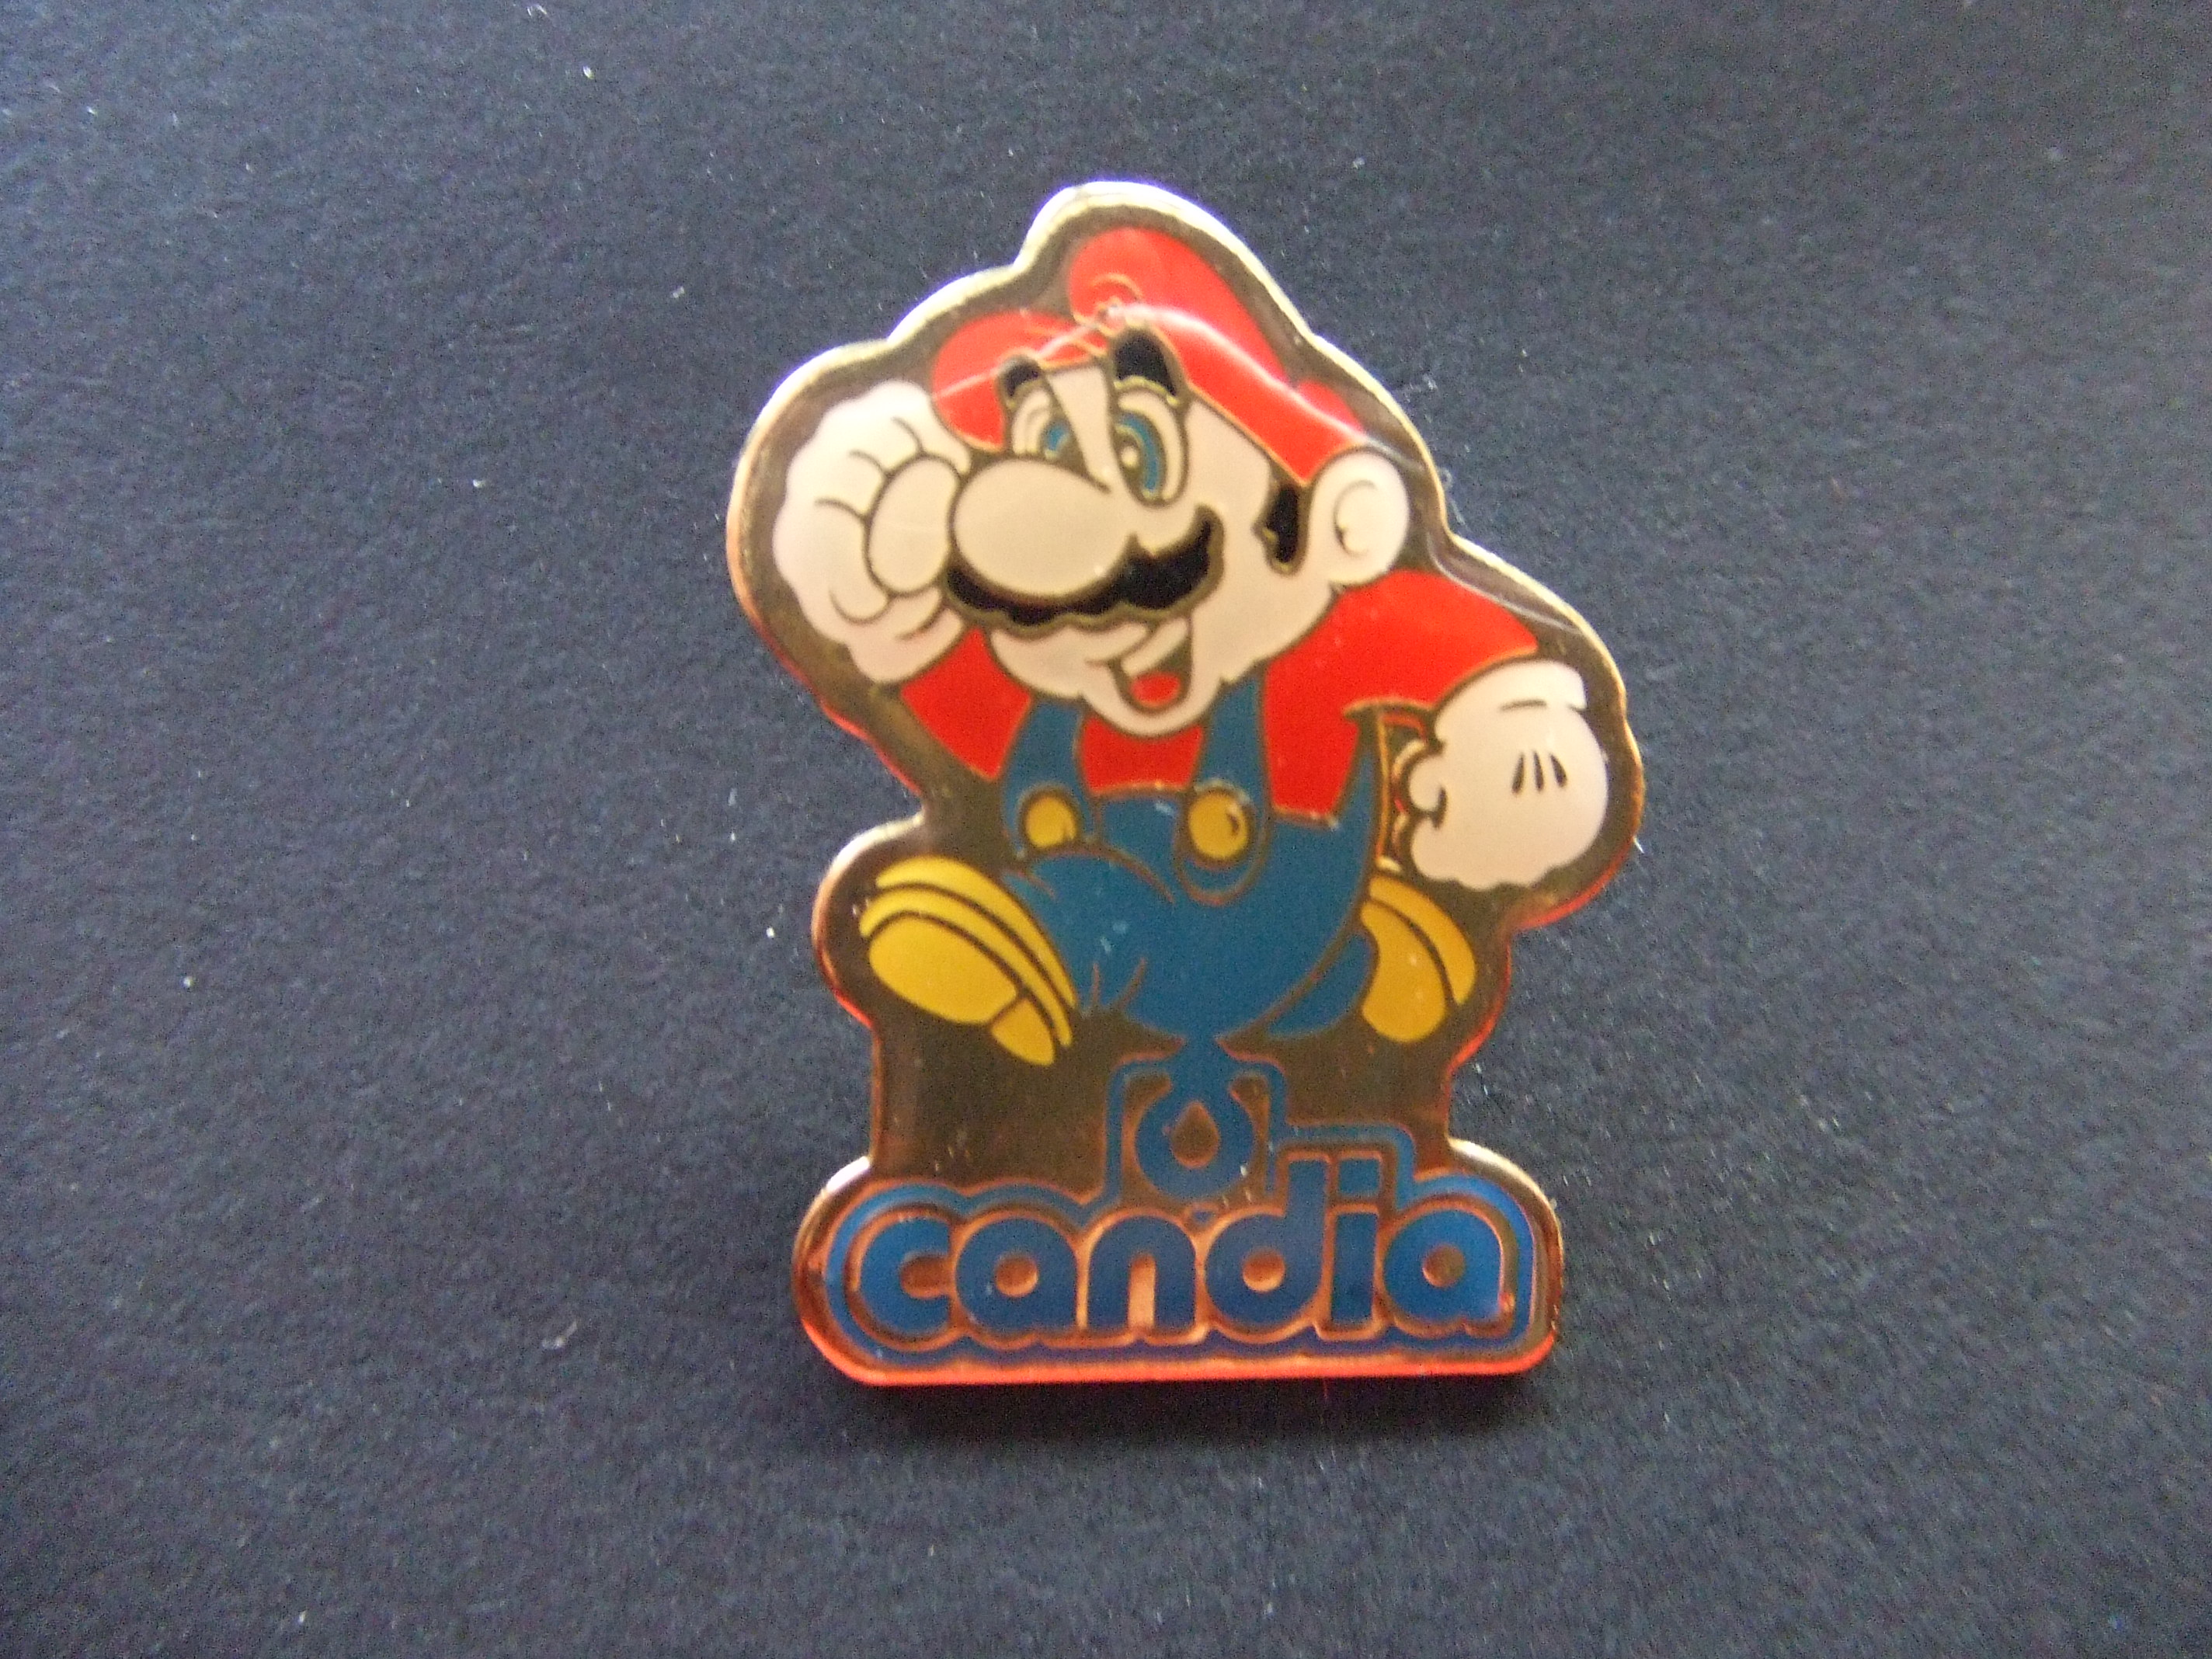 Super Mario computerspel games Candia